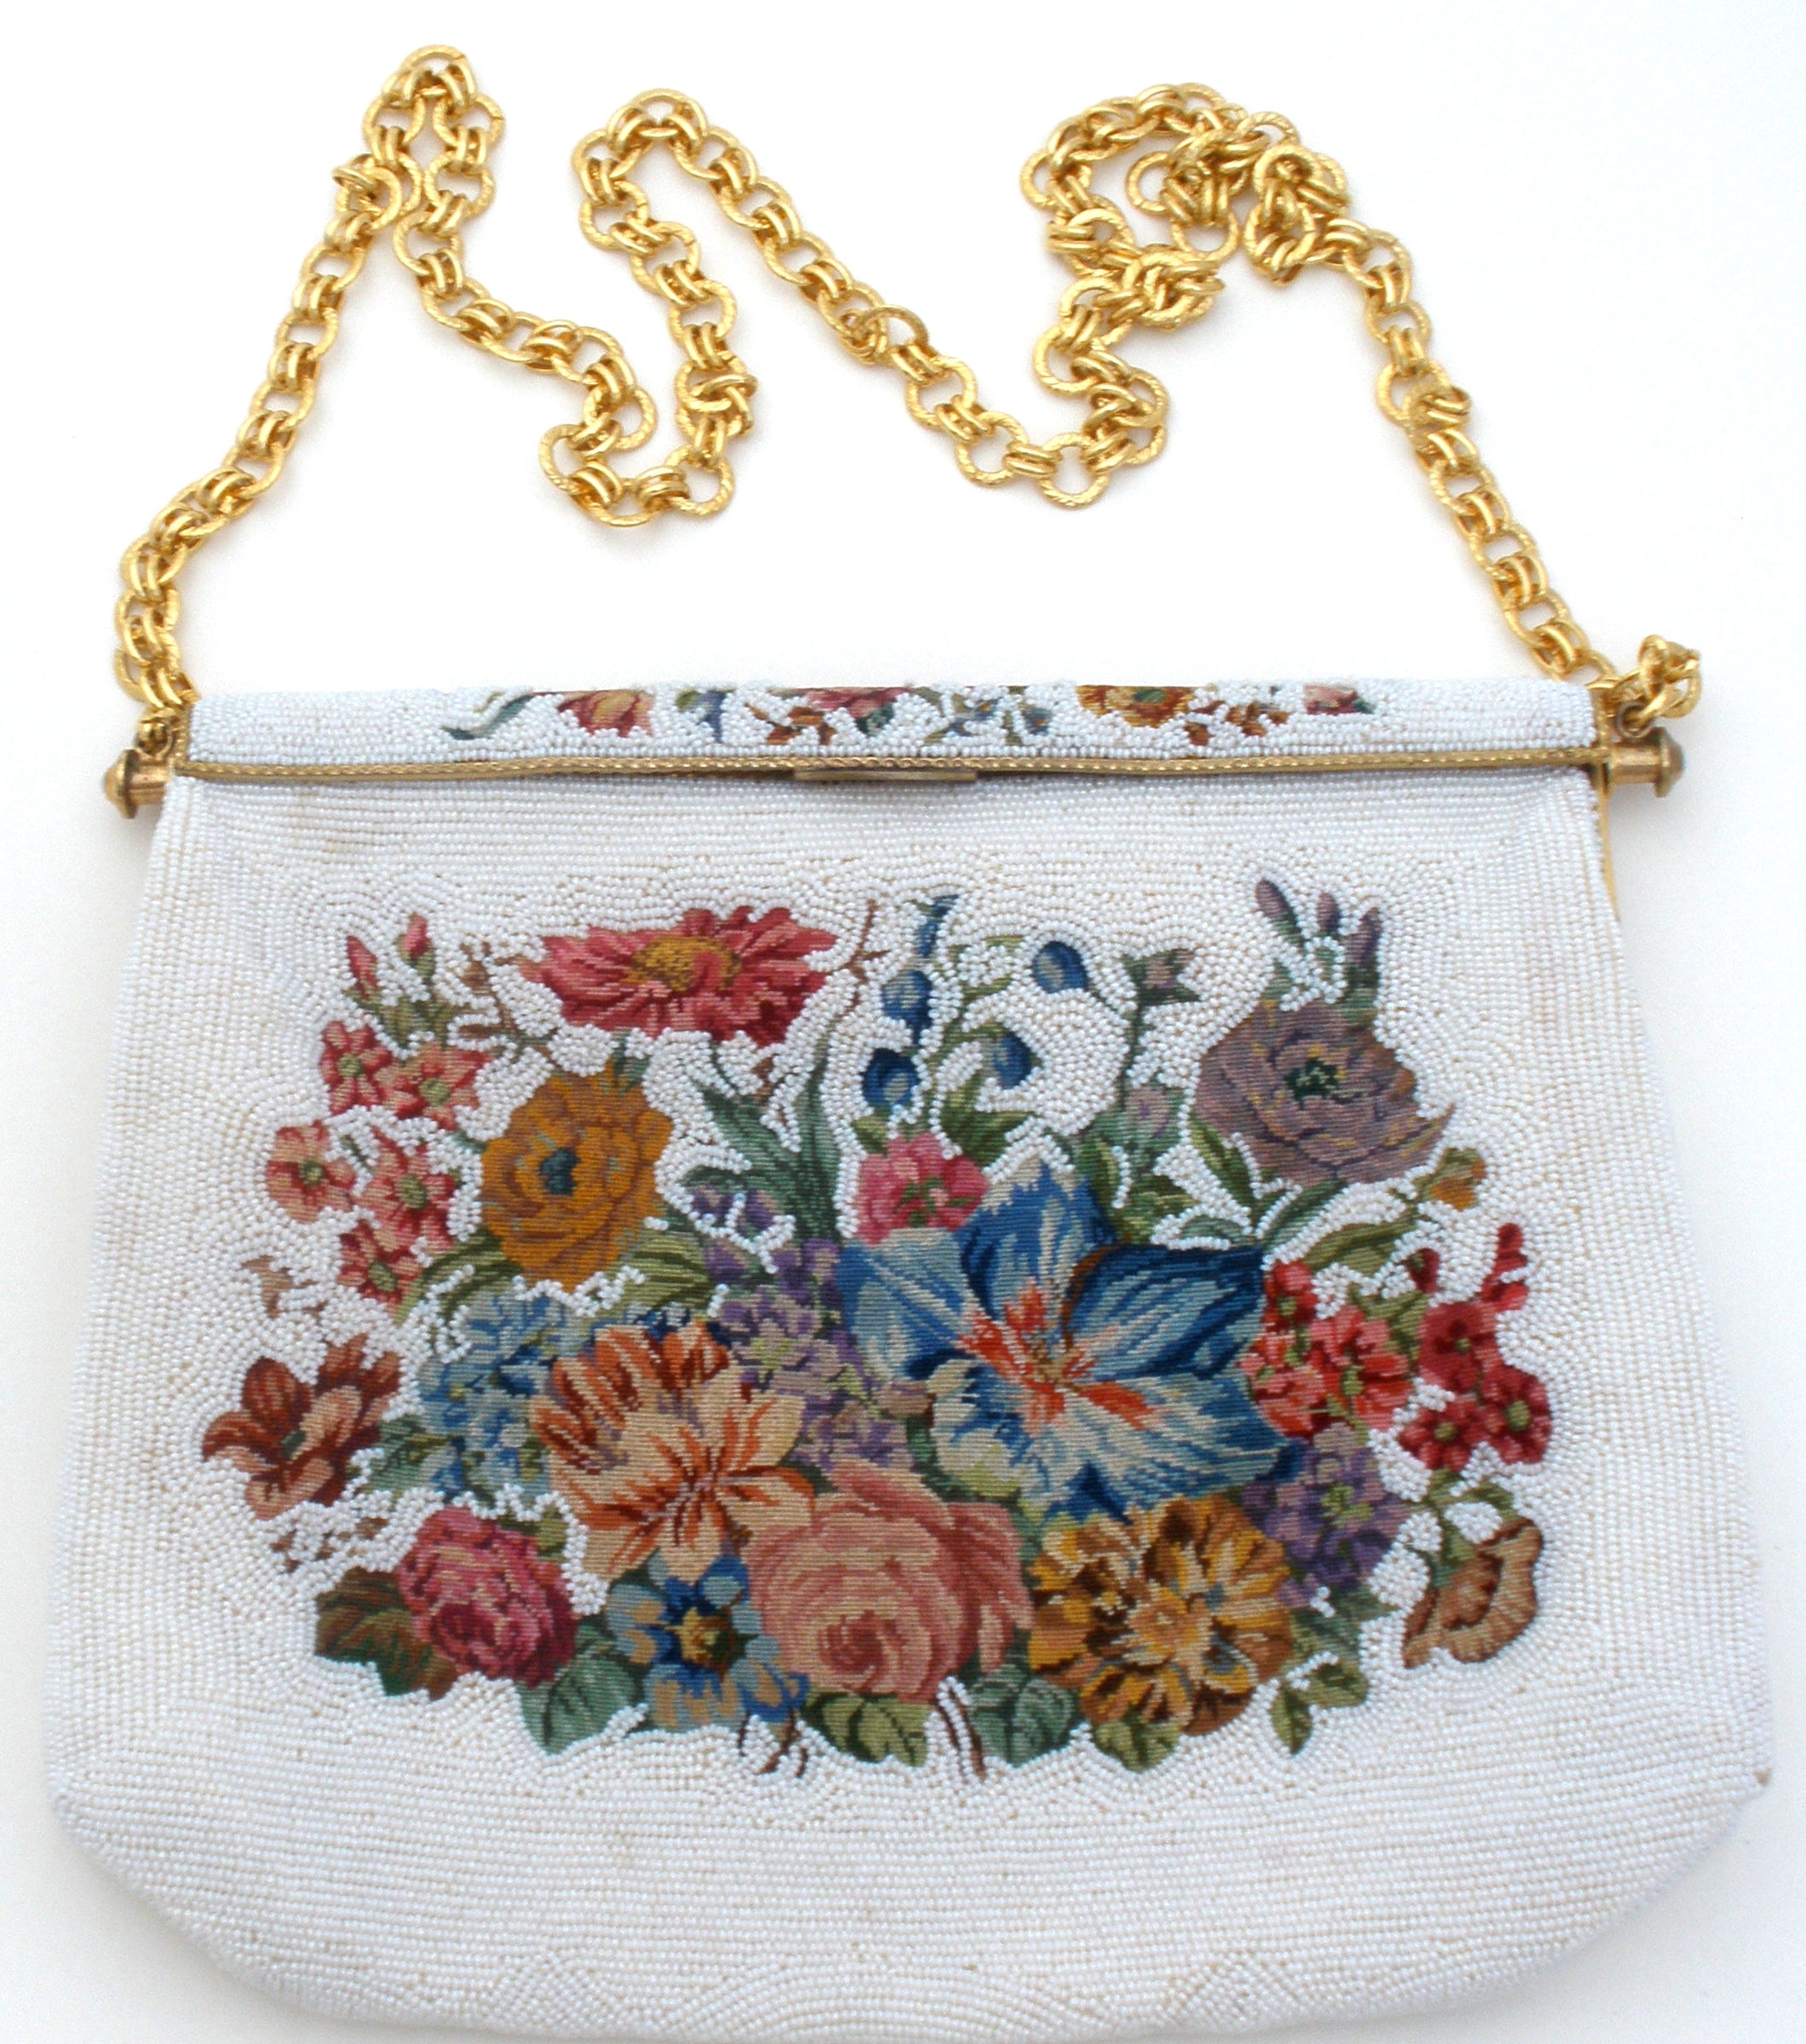 vintage purse made